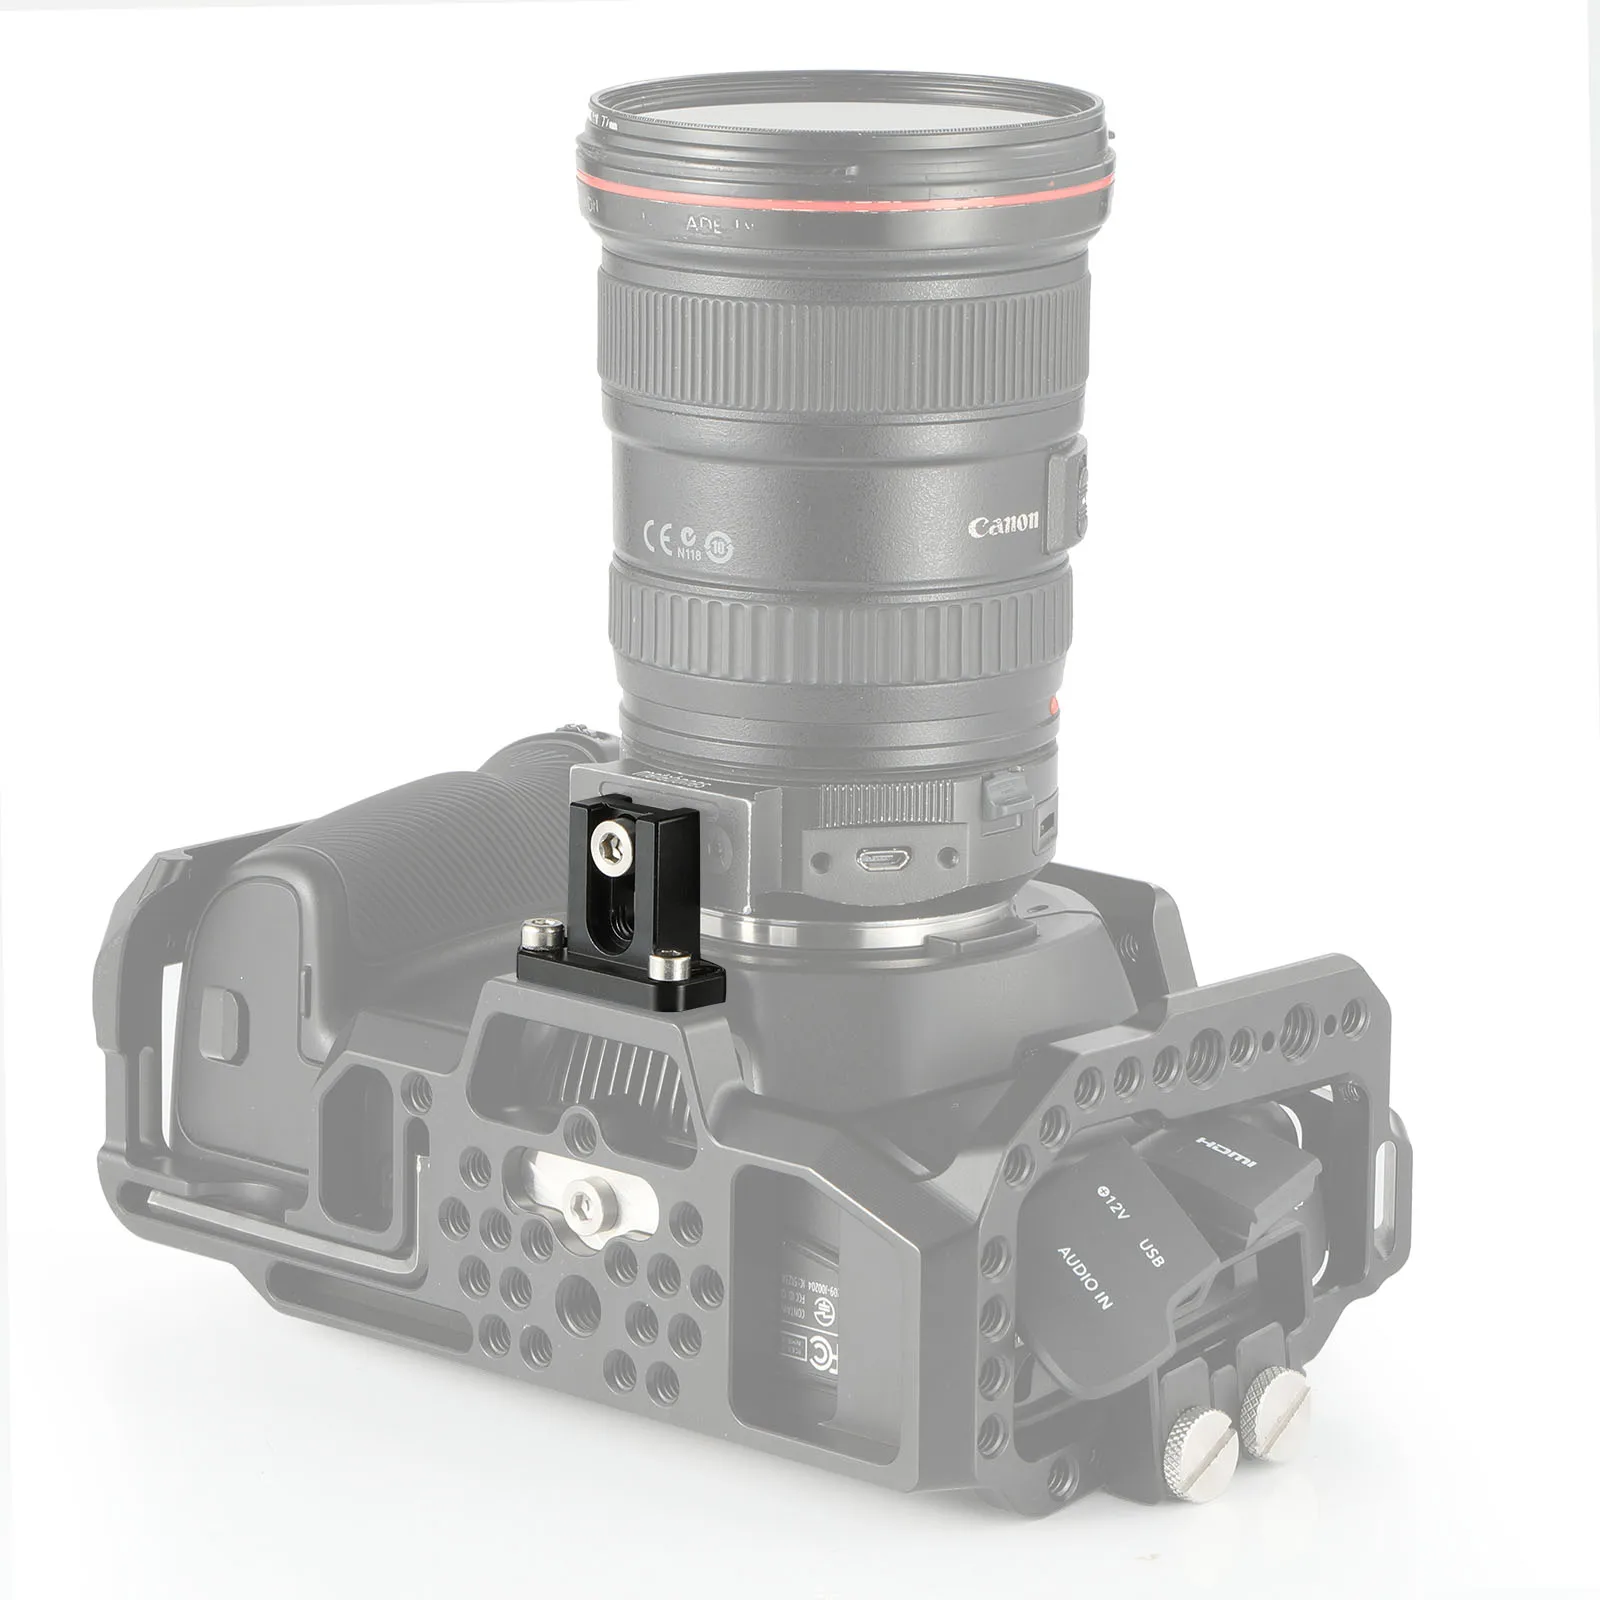 SmallRig BMPCC 4 K объектив камеры поддержка Metabones адаптер Поддержка для BMPCC 4 K камеры 2247